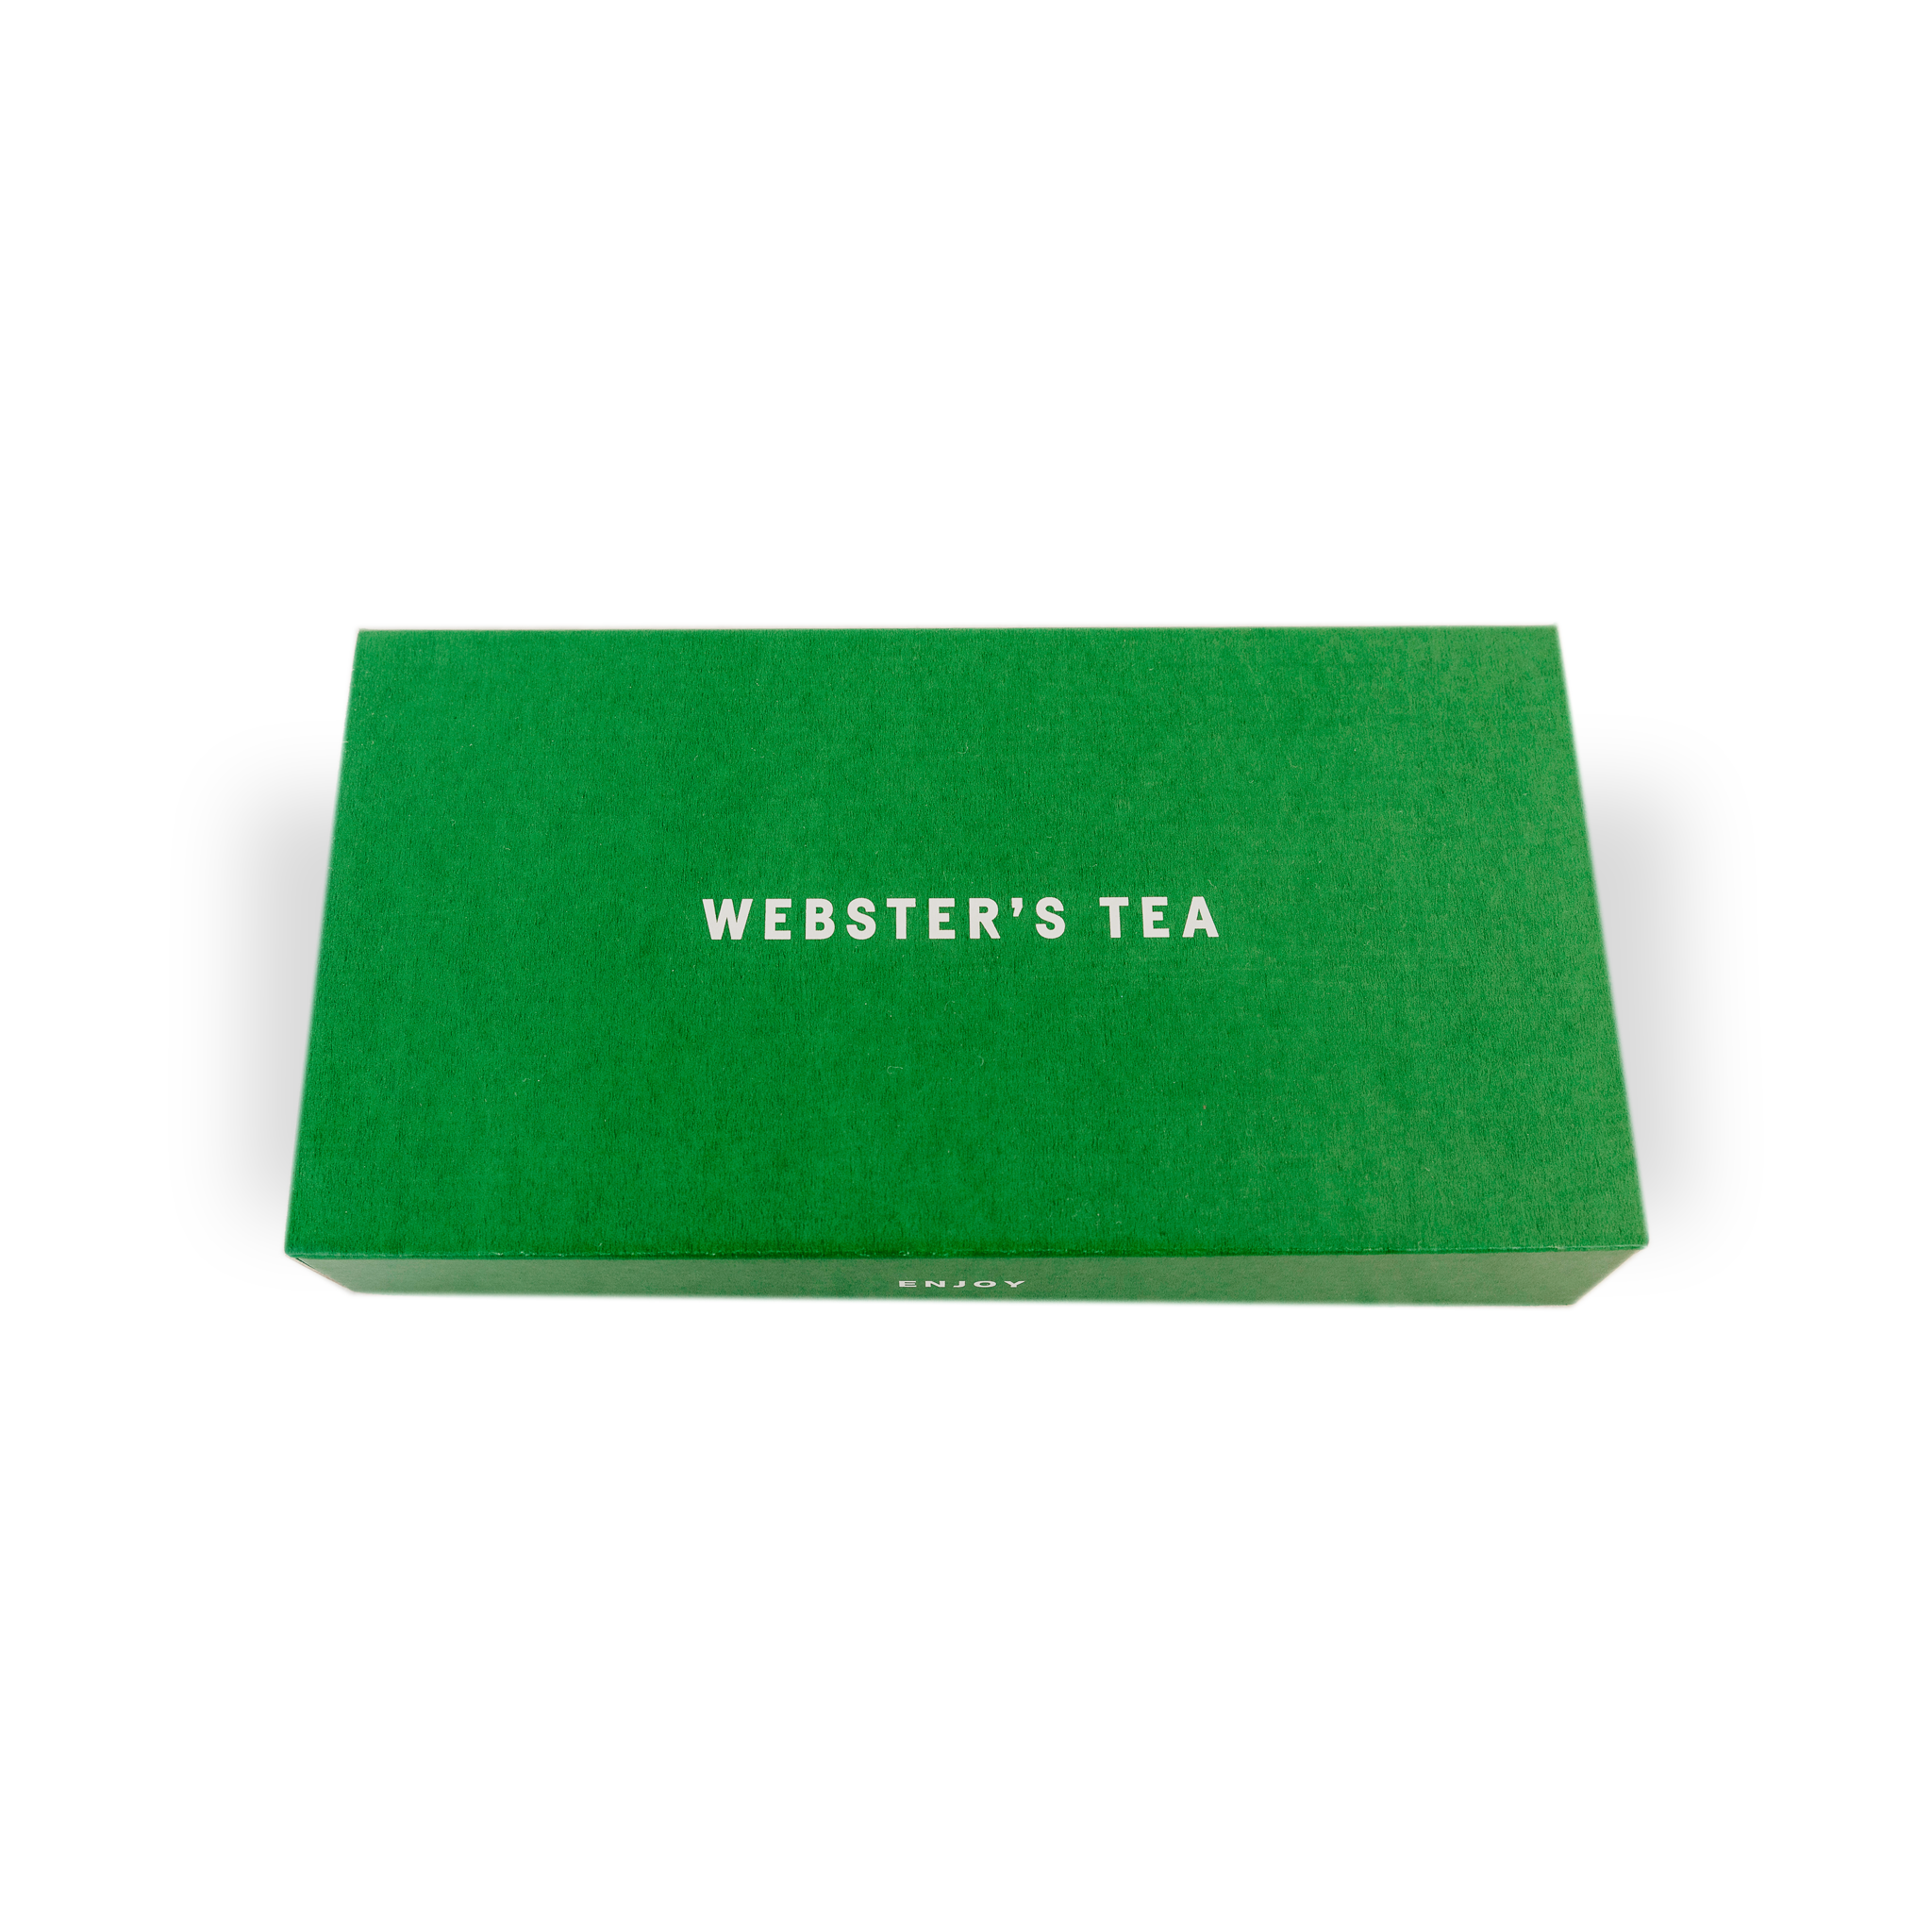 A green Webster's Tea gift box